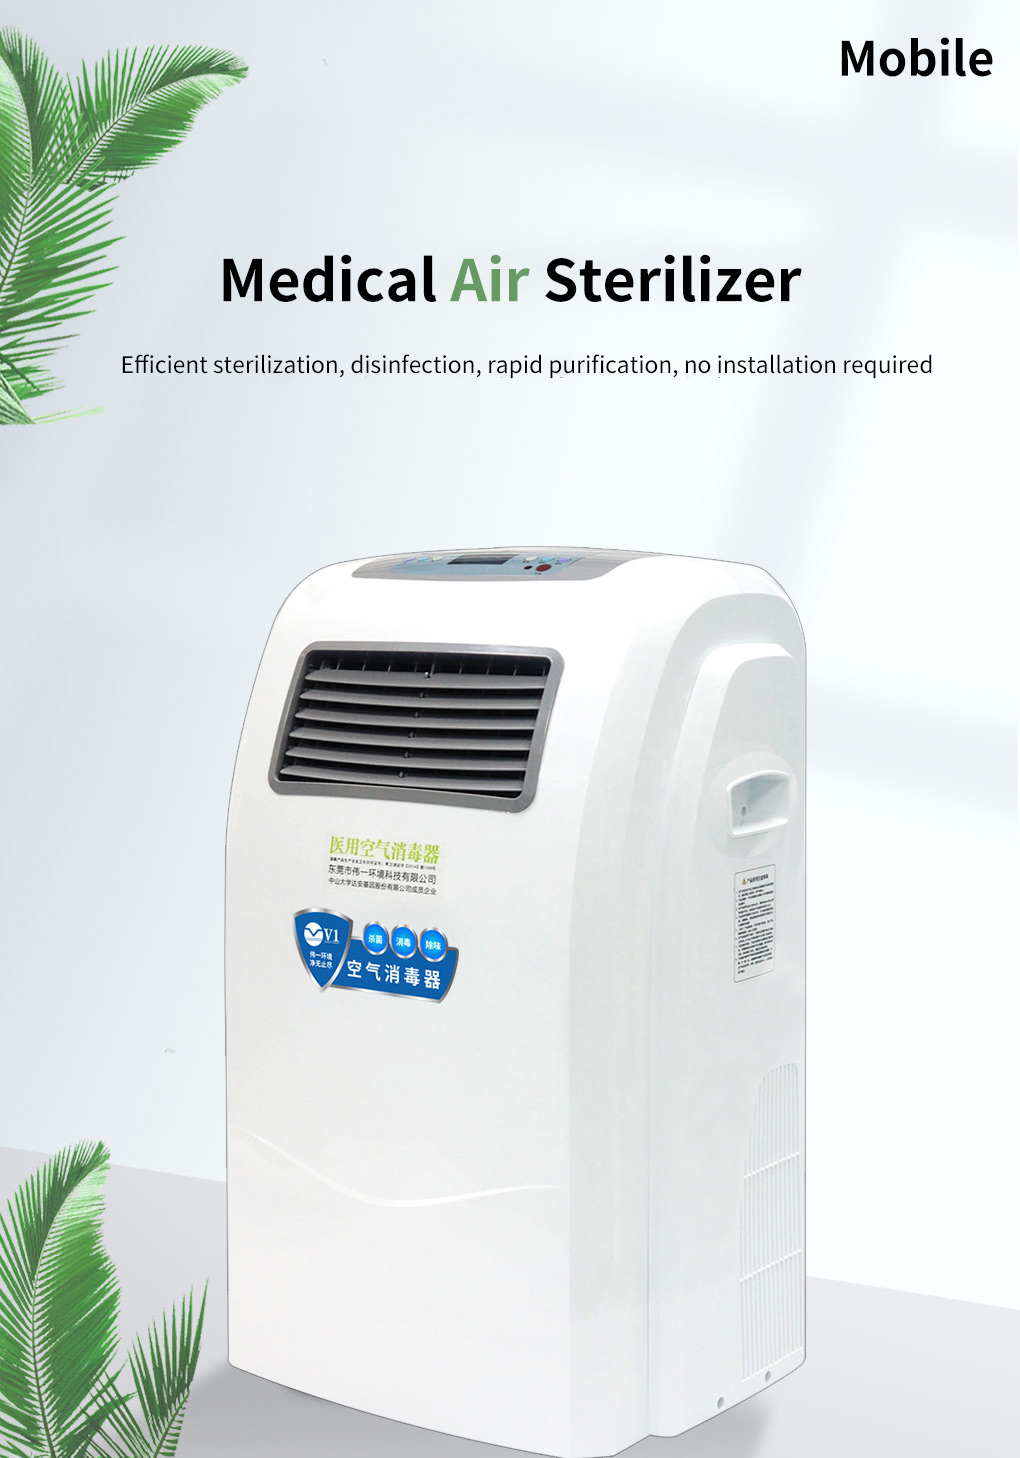 Mobile Medical Air Sterilizer